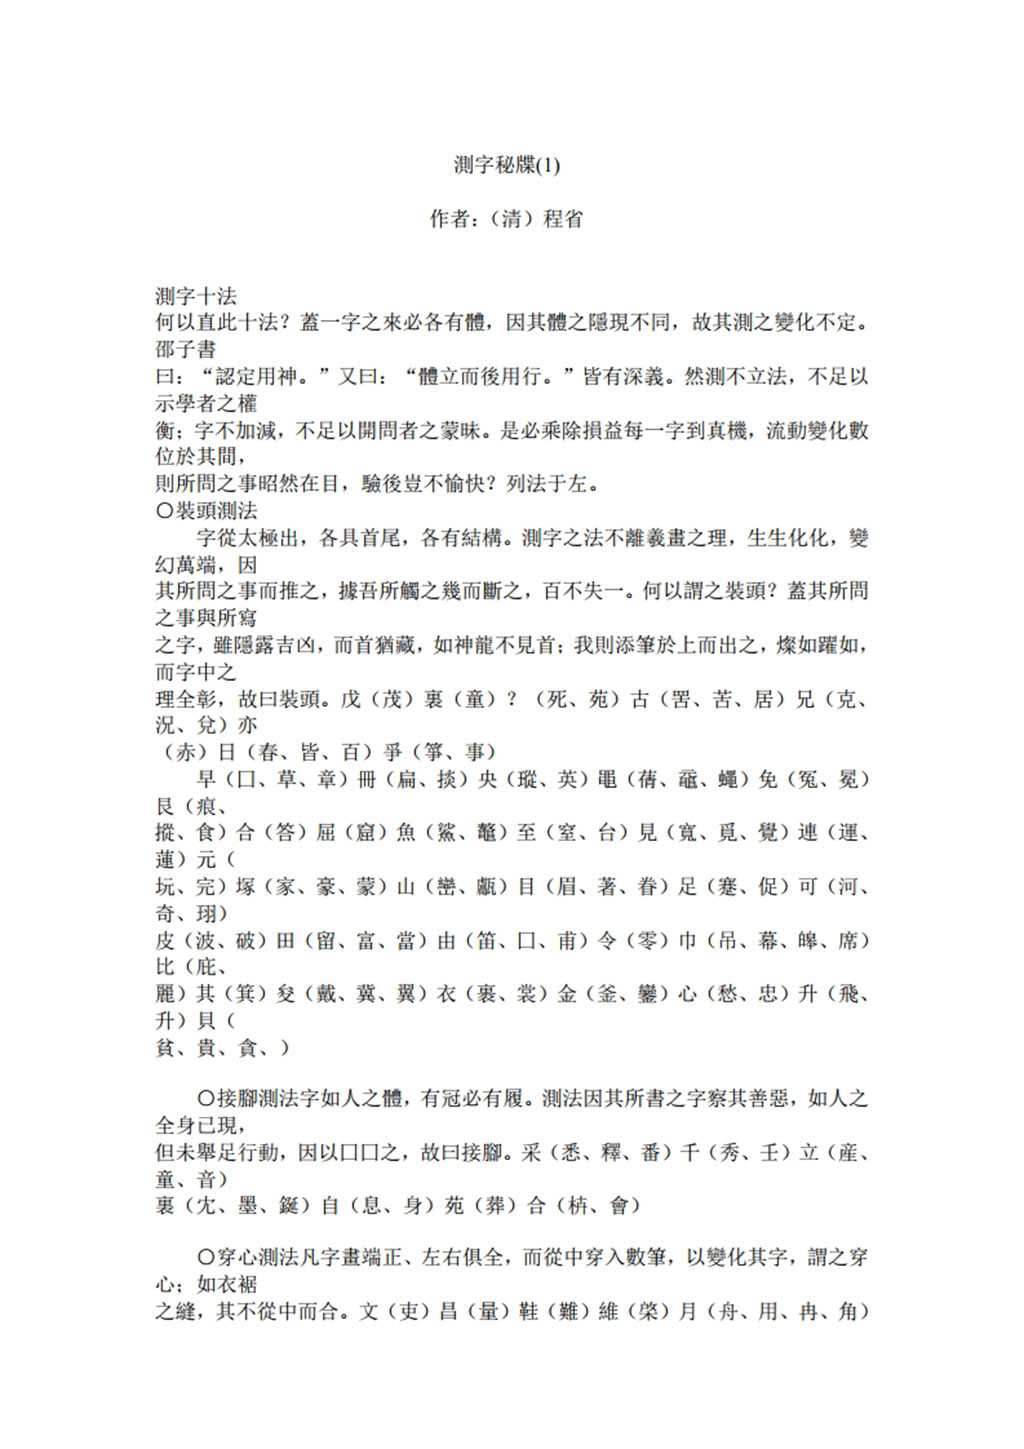 《Secret Word Test Book》 by Cheng Sheng (Qing).pdf